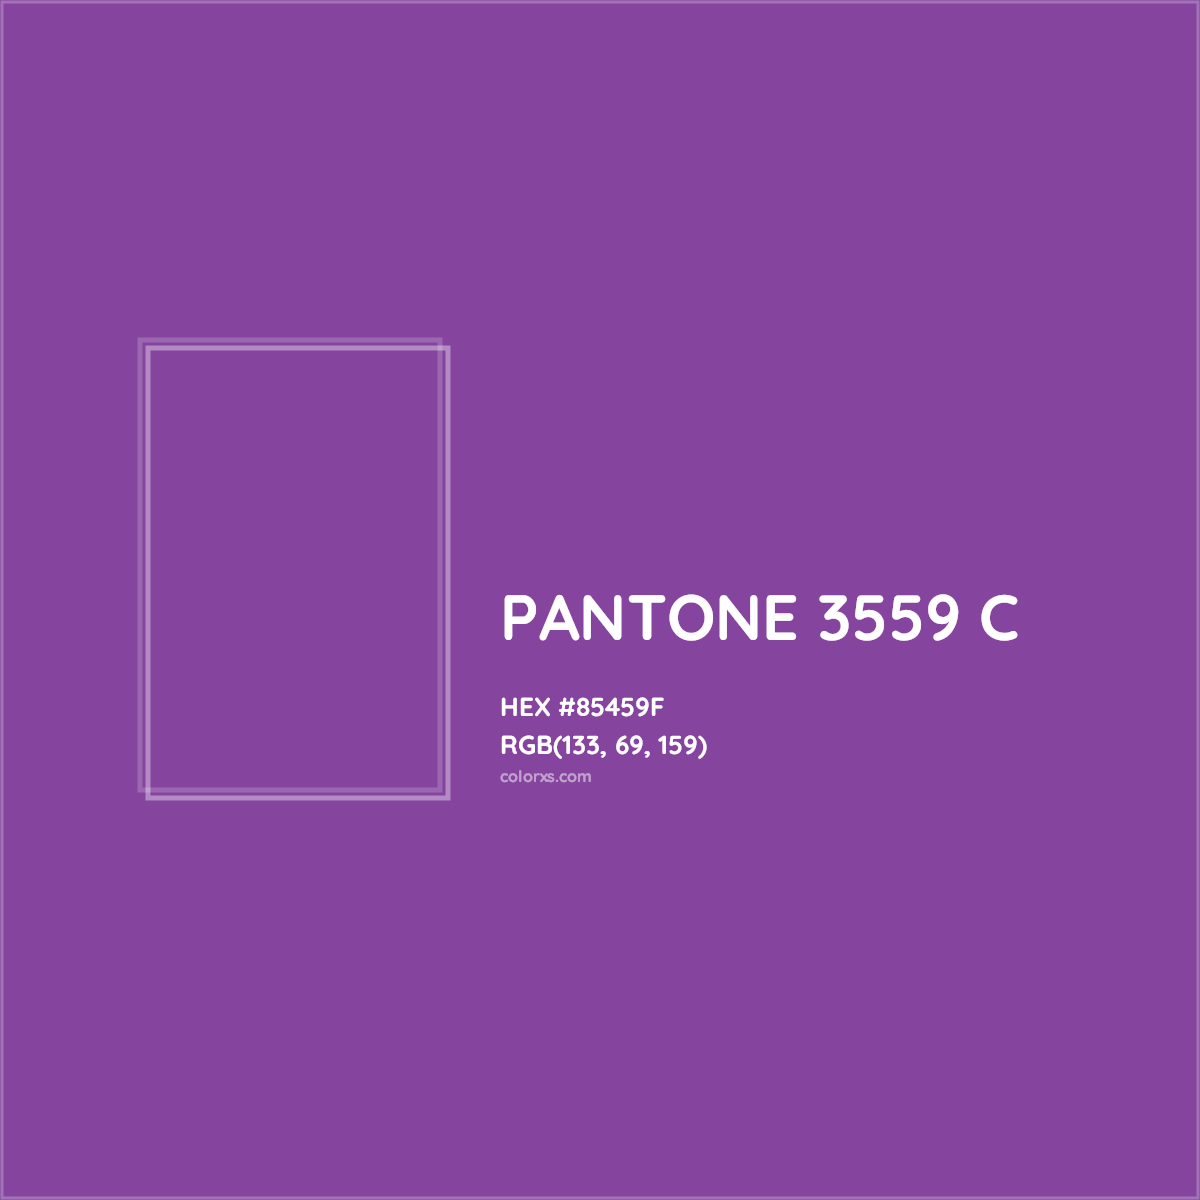 HEX #85459F PANTONE 3559 C CMS Pantone PMS - Color Code